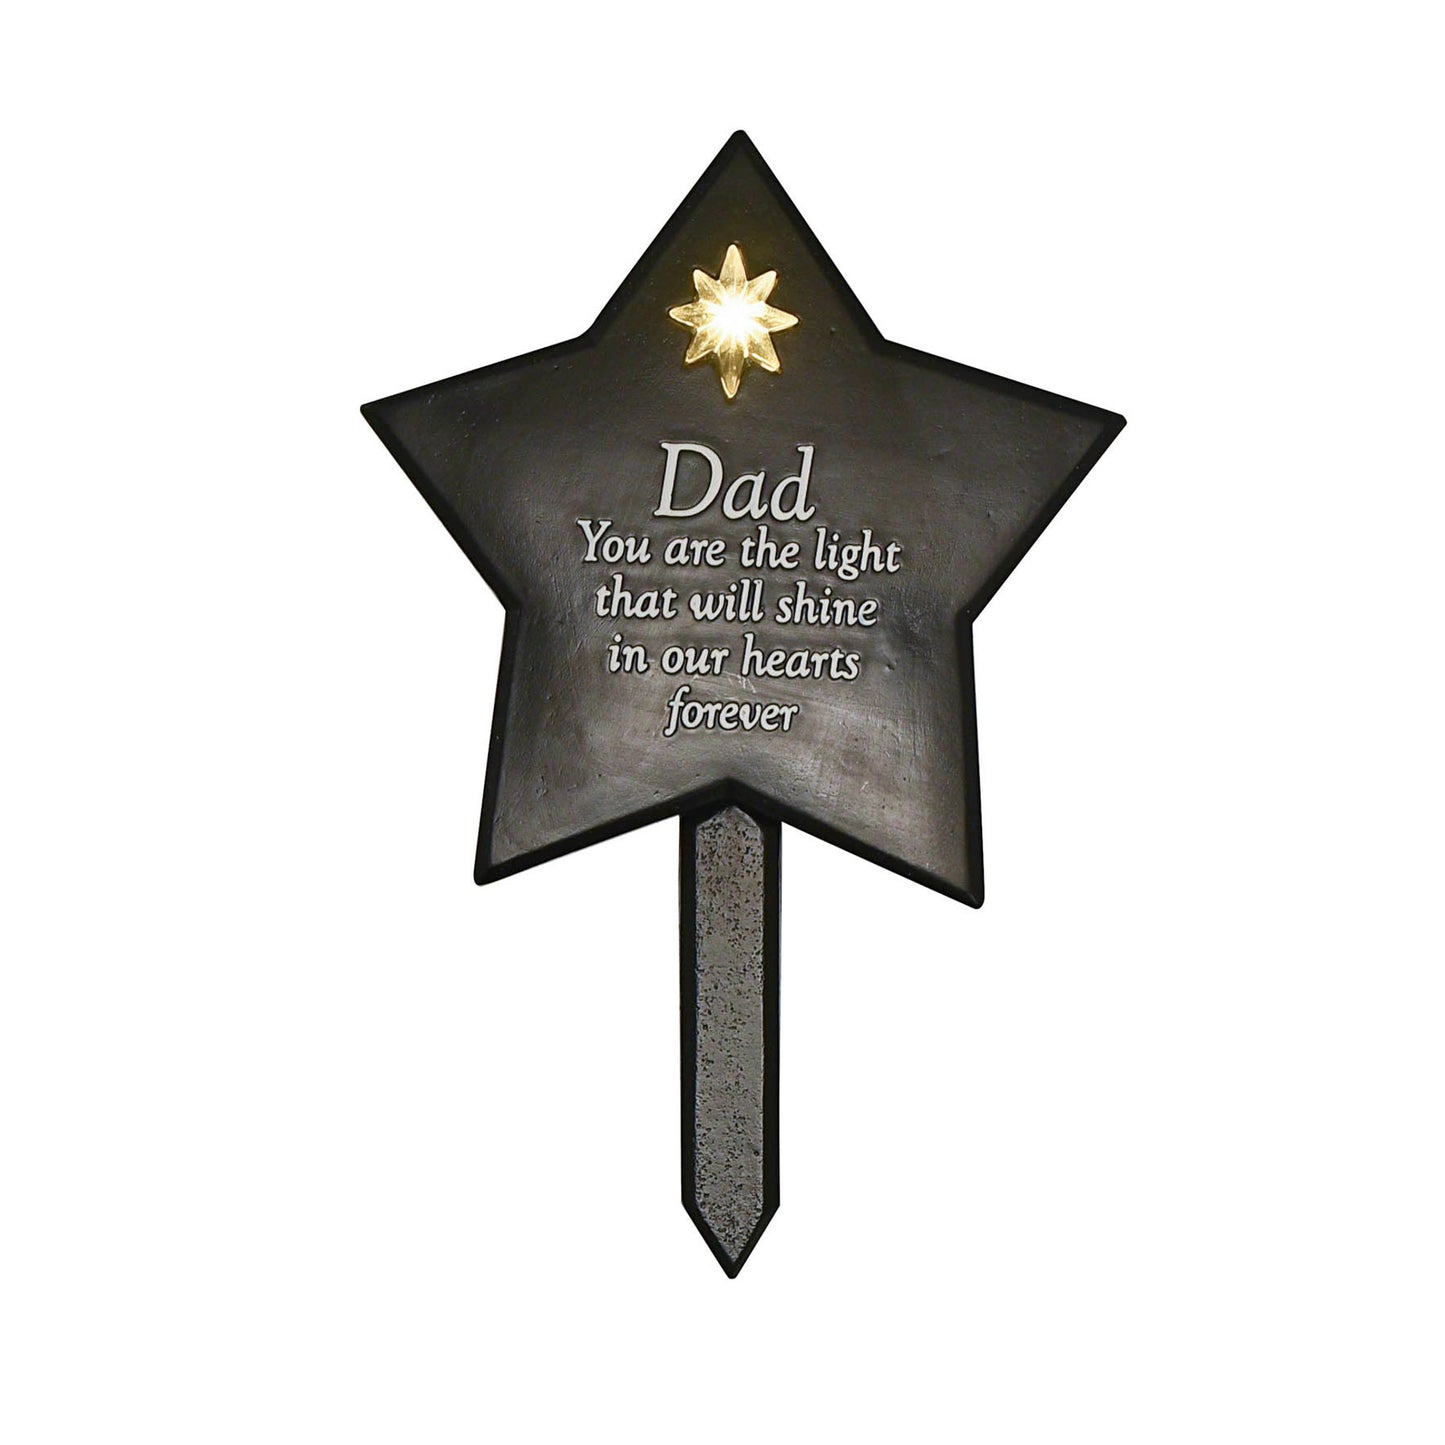 Memorial Solar Light Up Star Stake Plaque - Dad